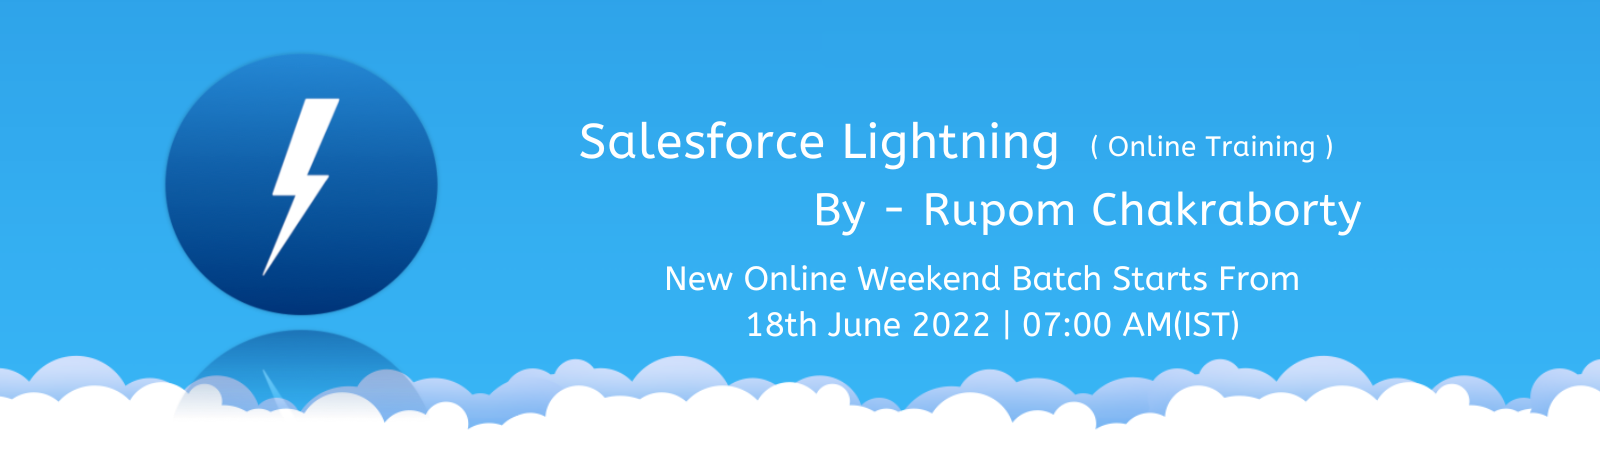 salesforce-lightning